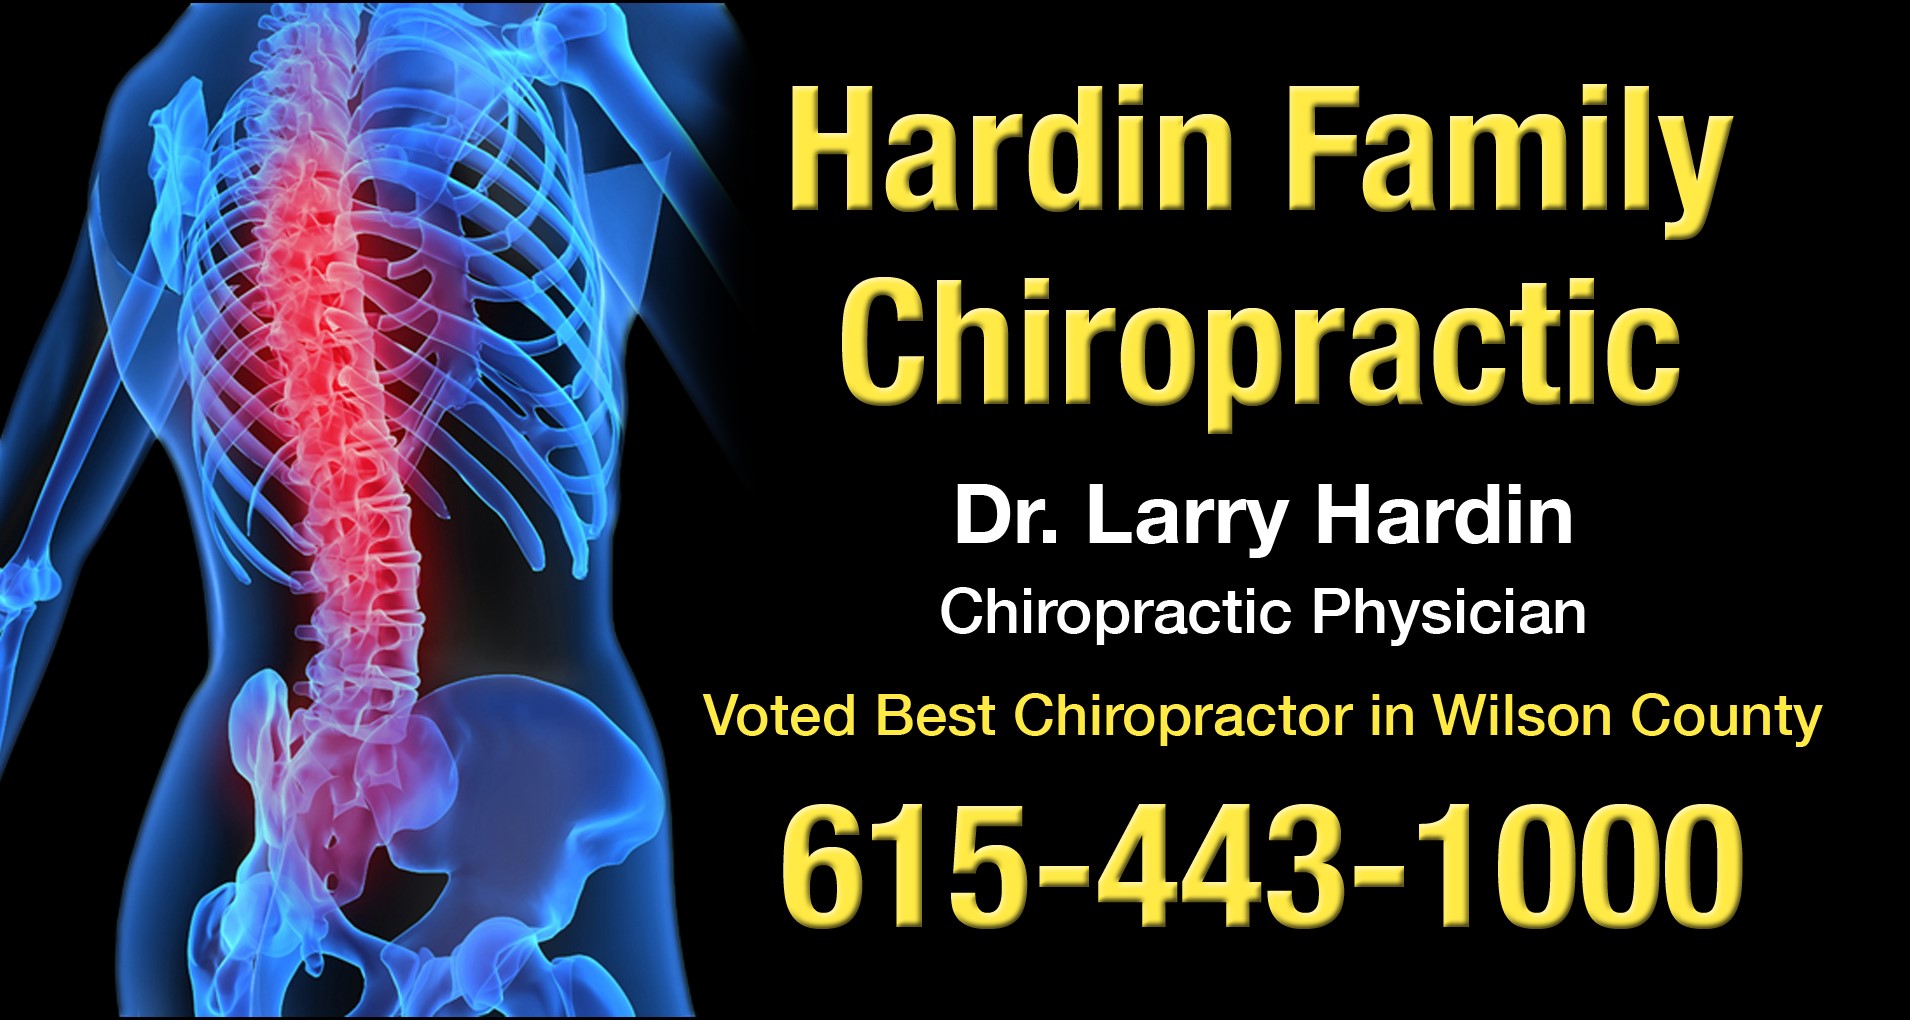 Hardin Family Chiropractic - Voted Best Chiropractor in Wilson County